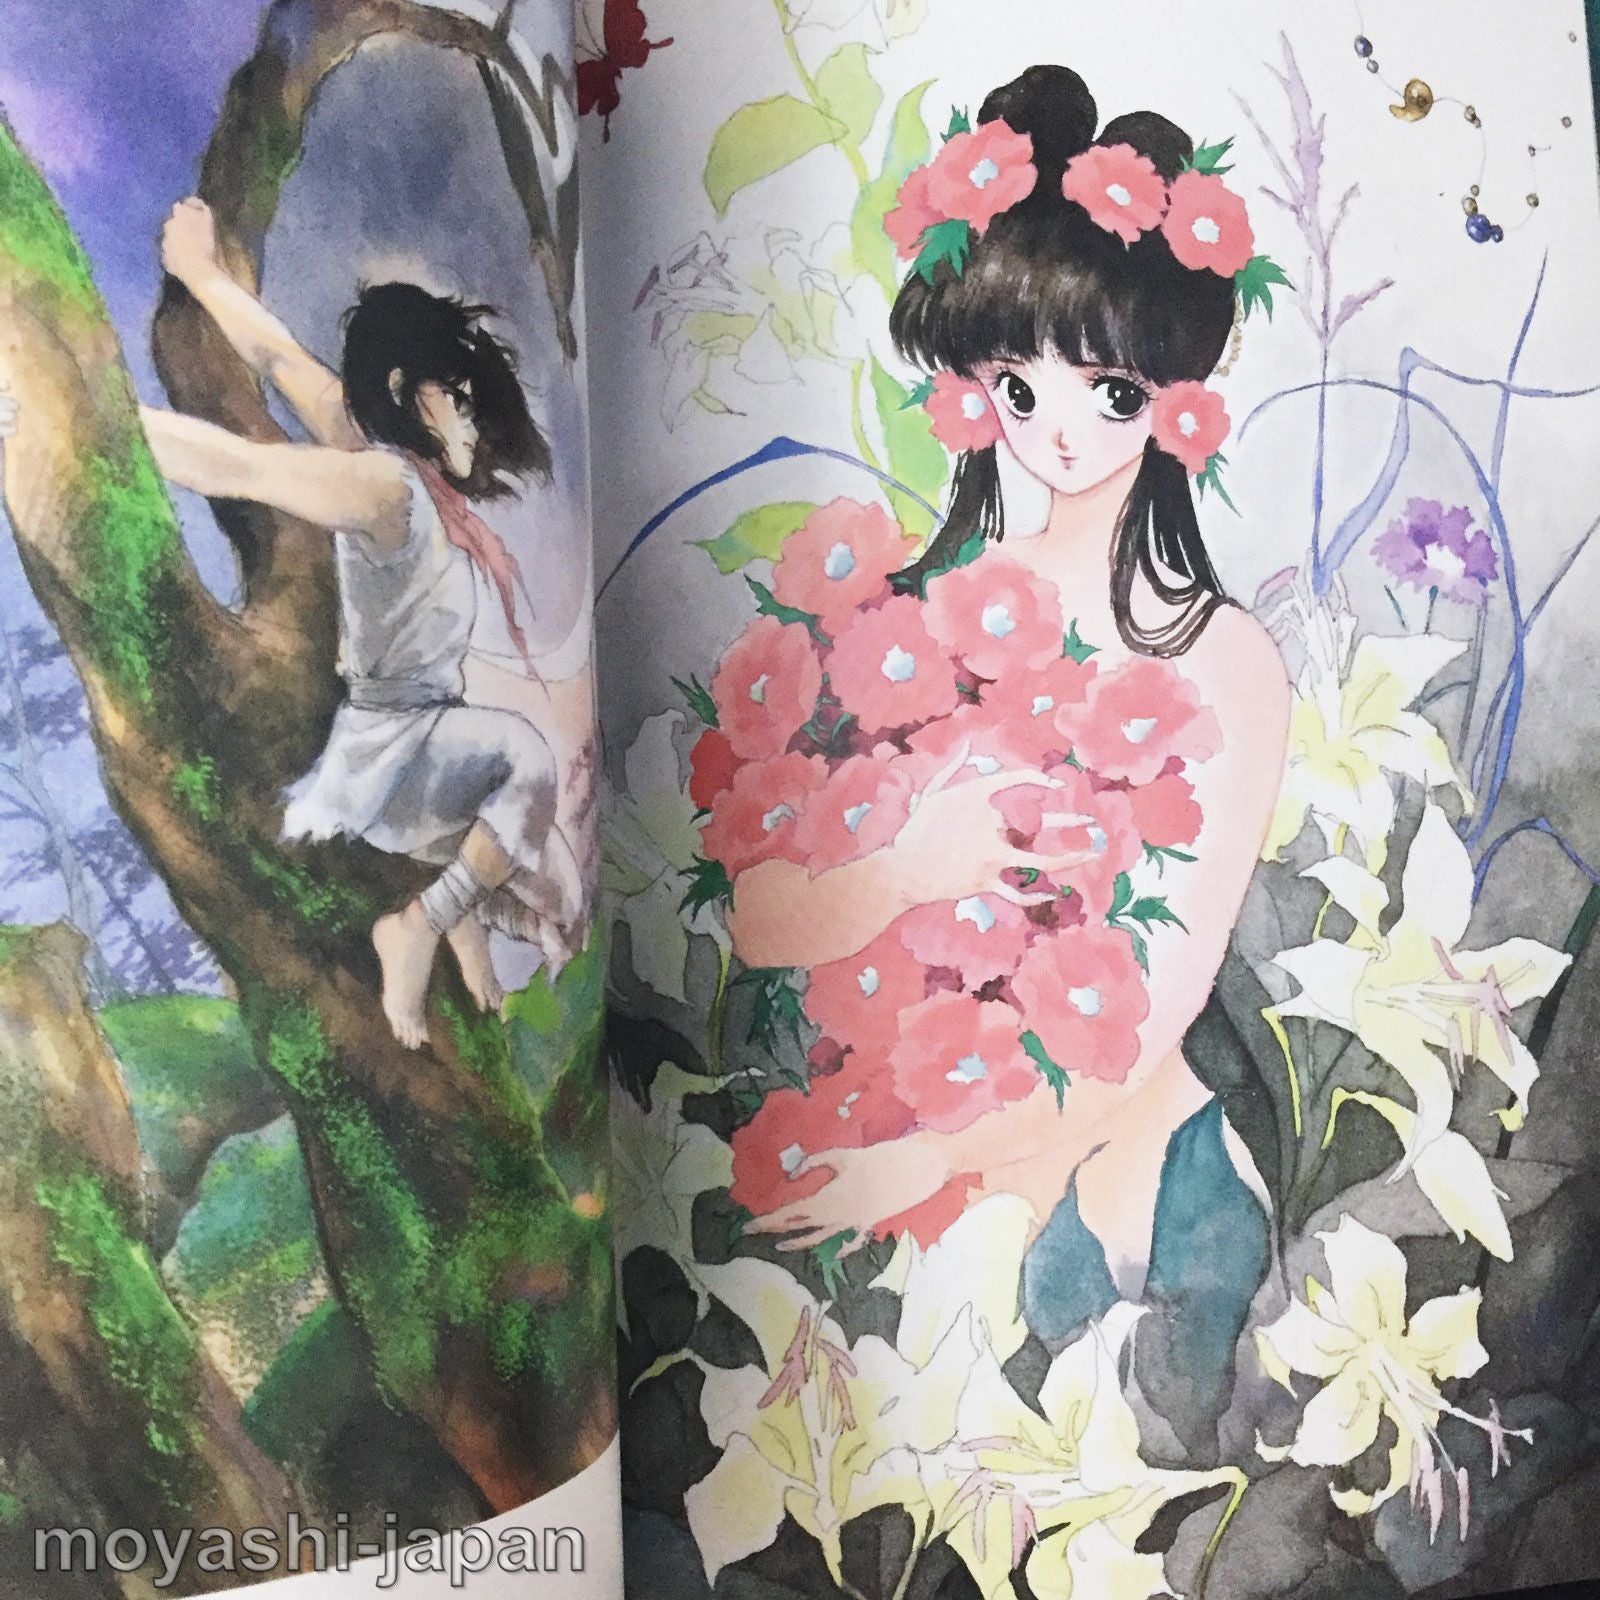 Mutsumi Inomata Illustration ART BOOK ' Utsunomiko' – MOYASHI JAPAN BOOKS